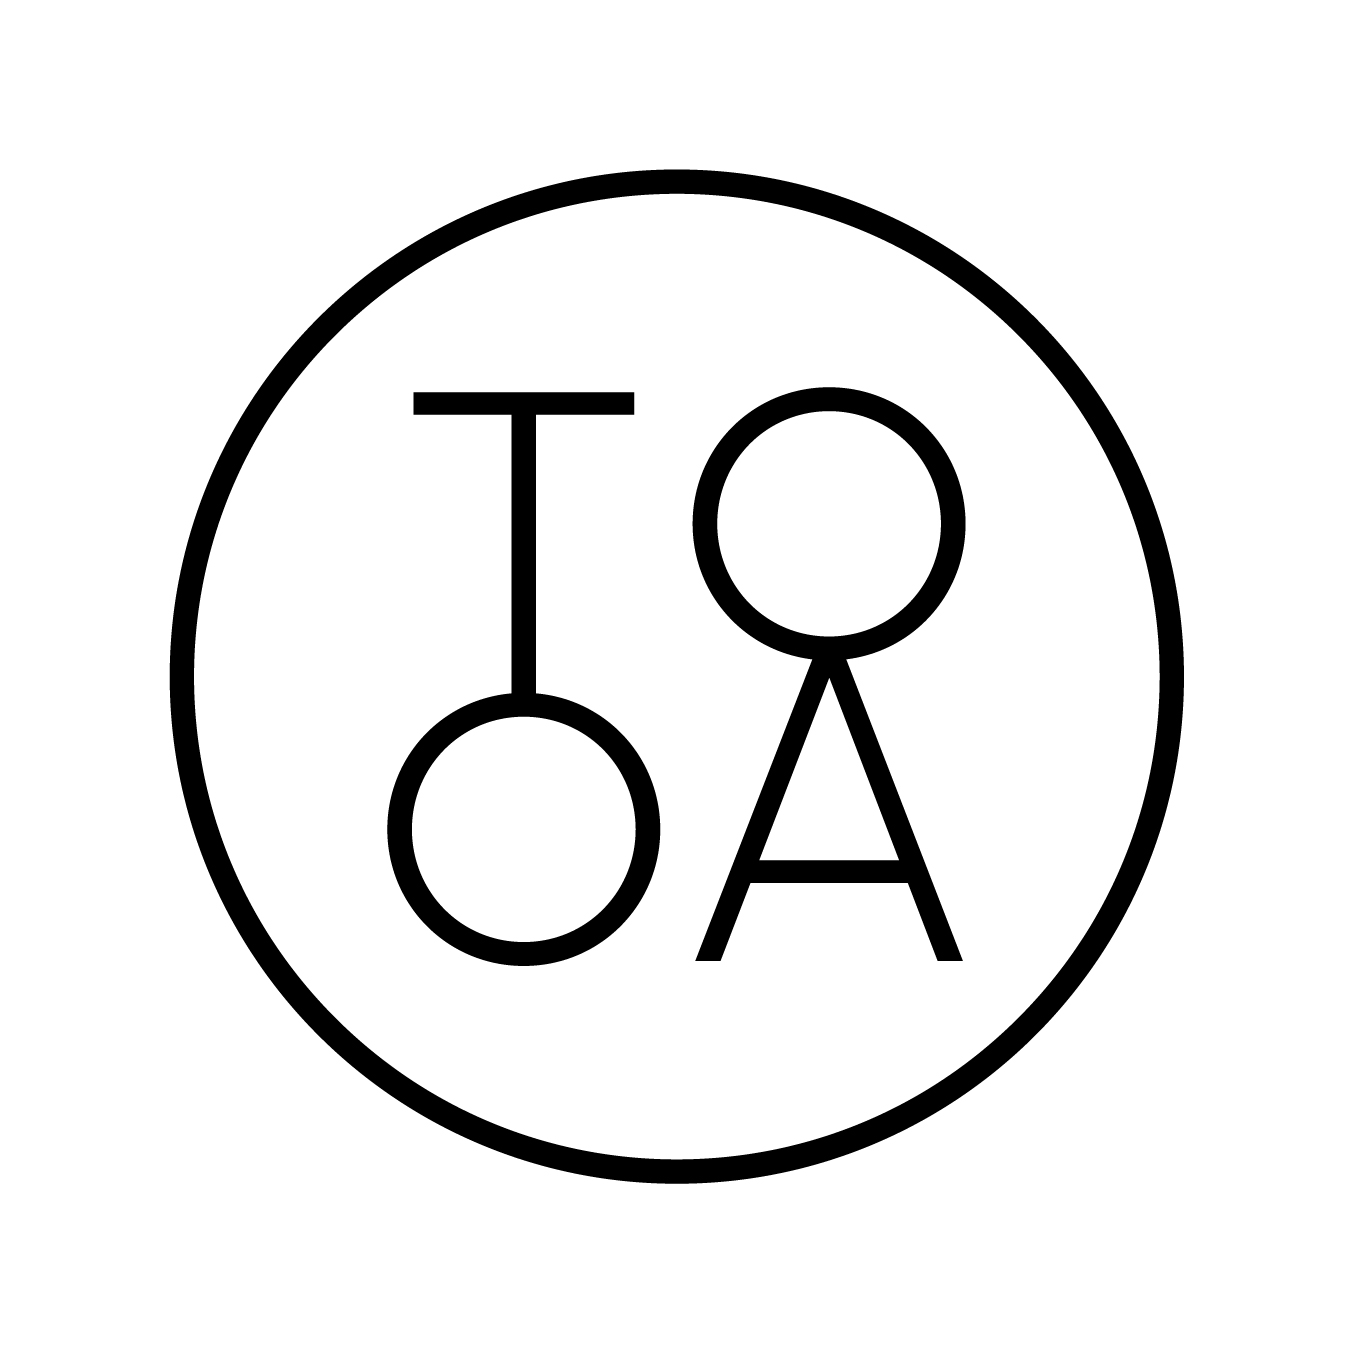 Logo TooA SpA